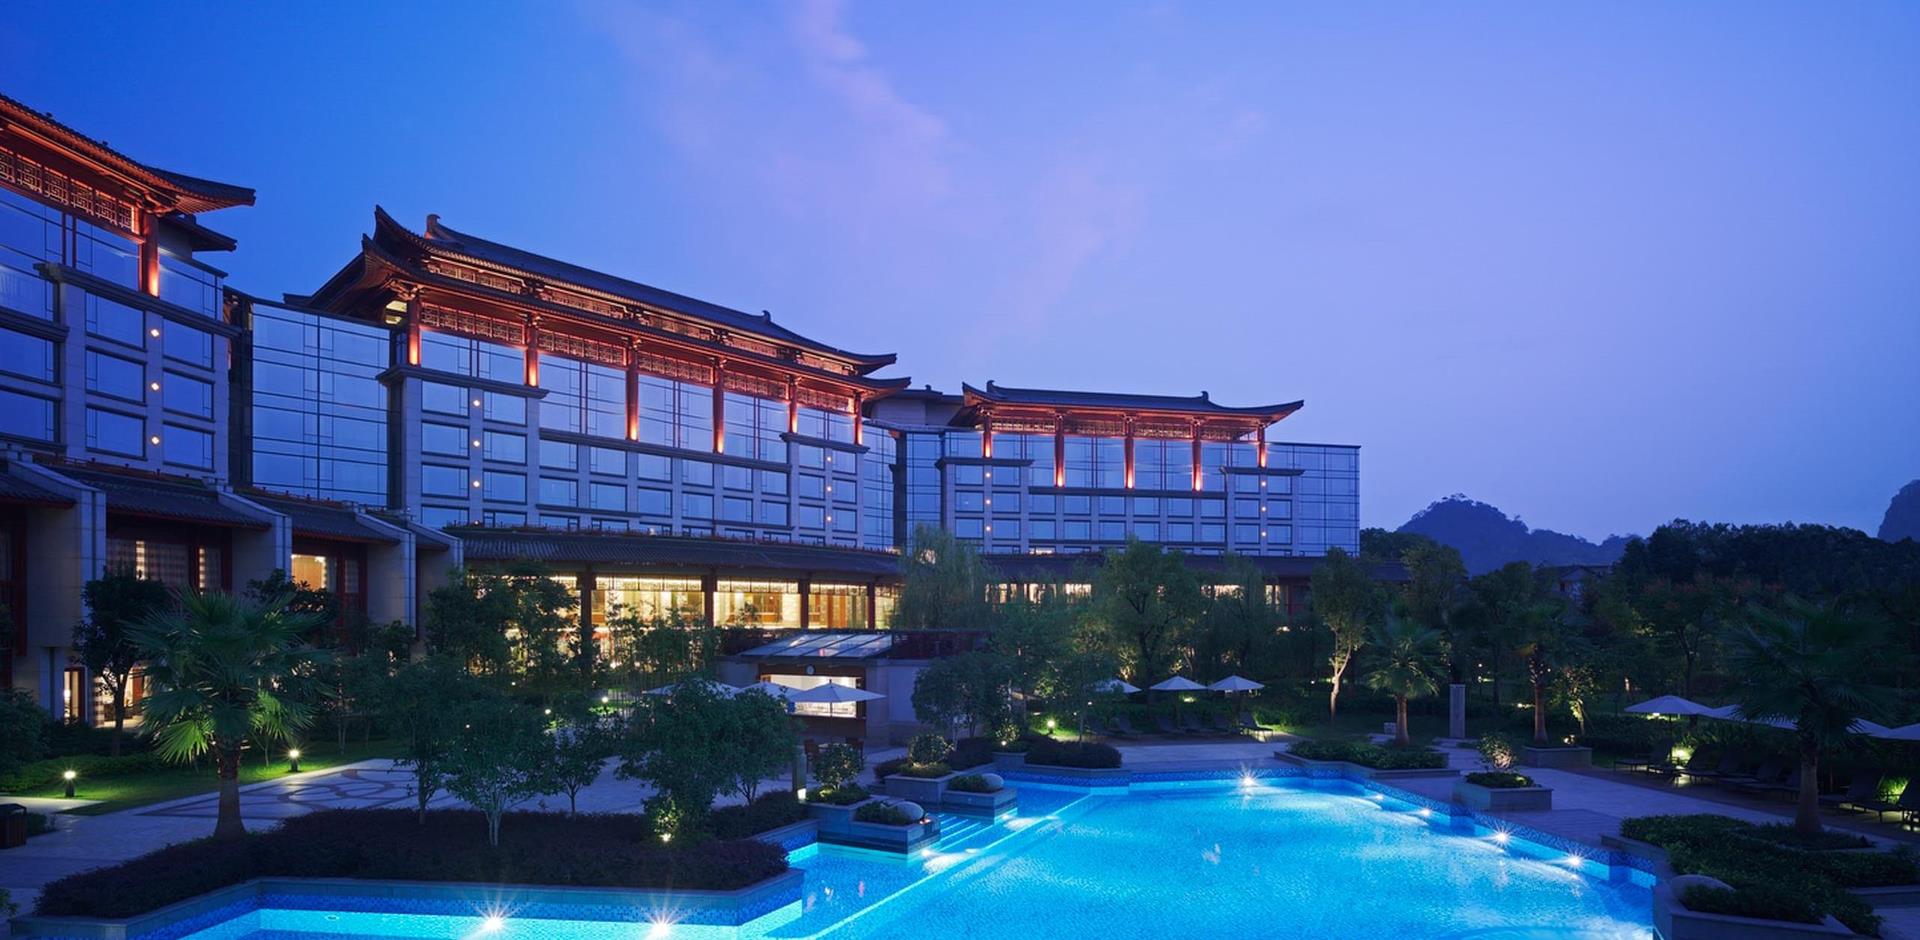 Pool and exterior, Shangri-La Guilin, China